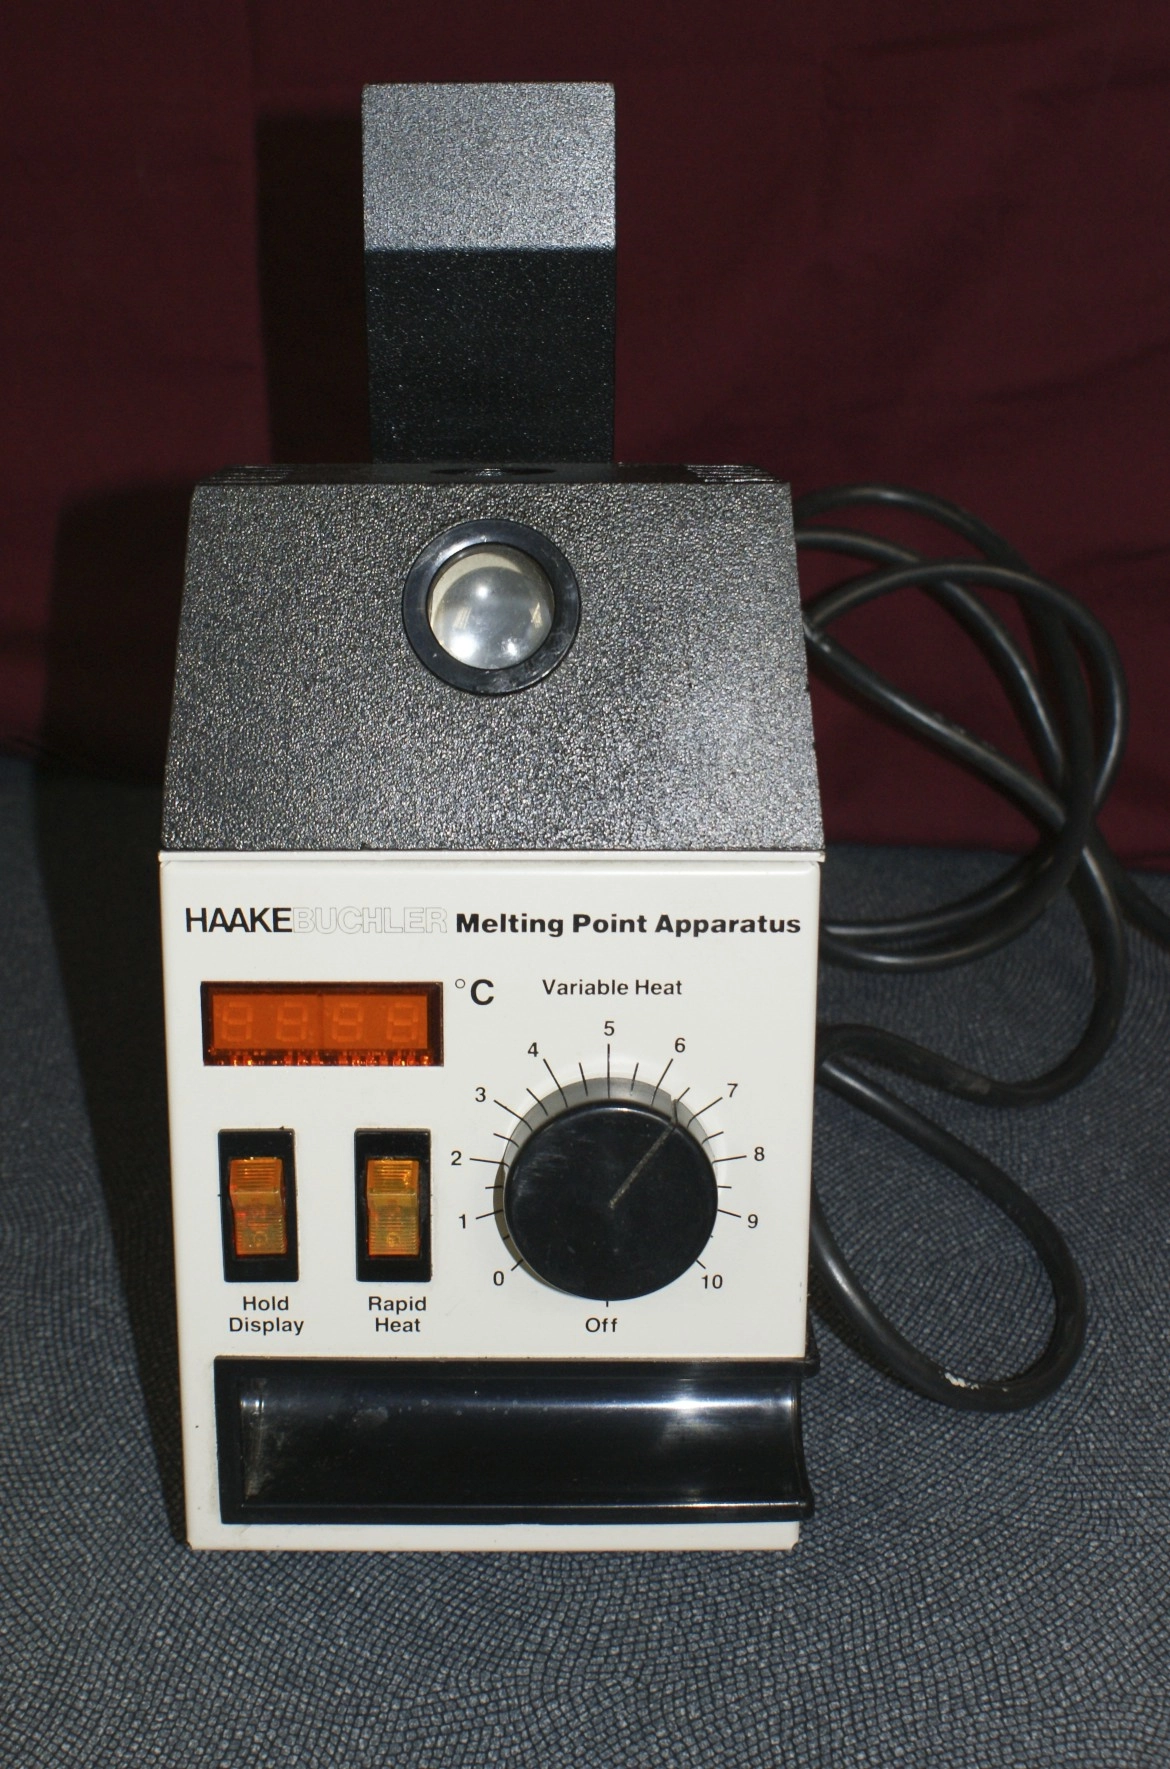 Haake Buchler Melting Point Apparatus HaakeBuchler Melting Piont Apparatus Digital  used